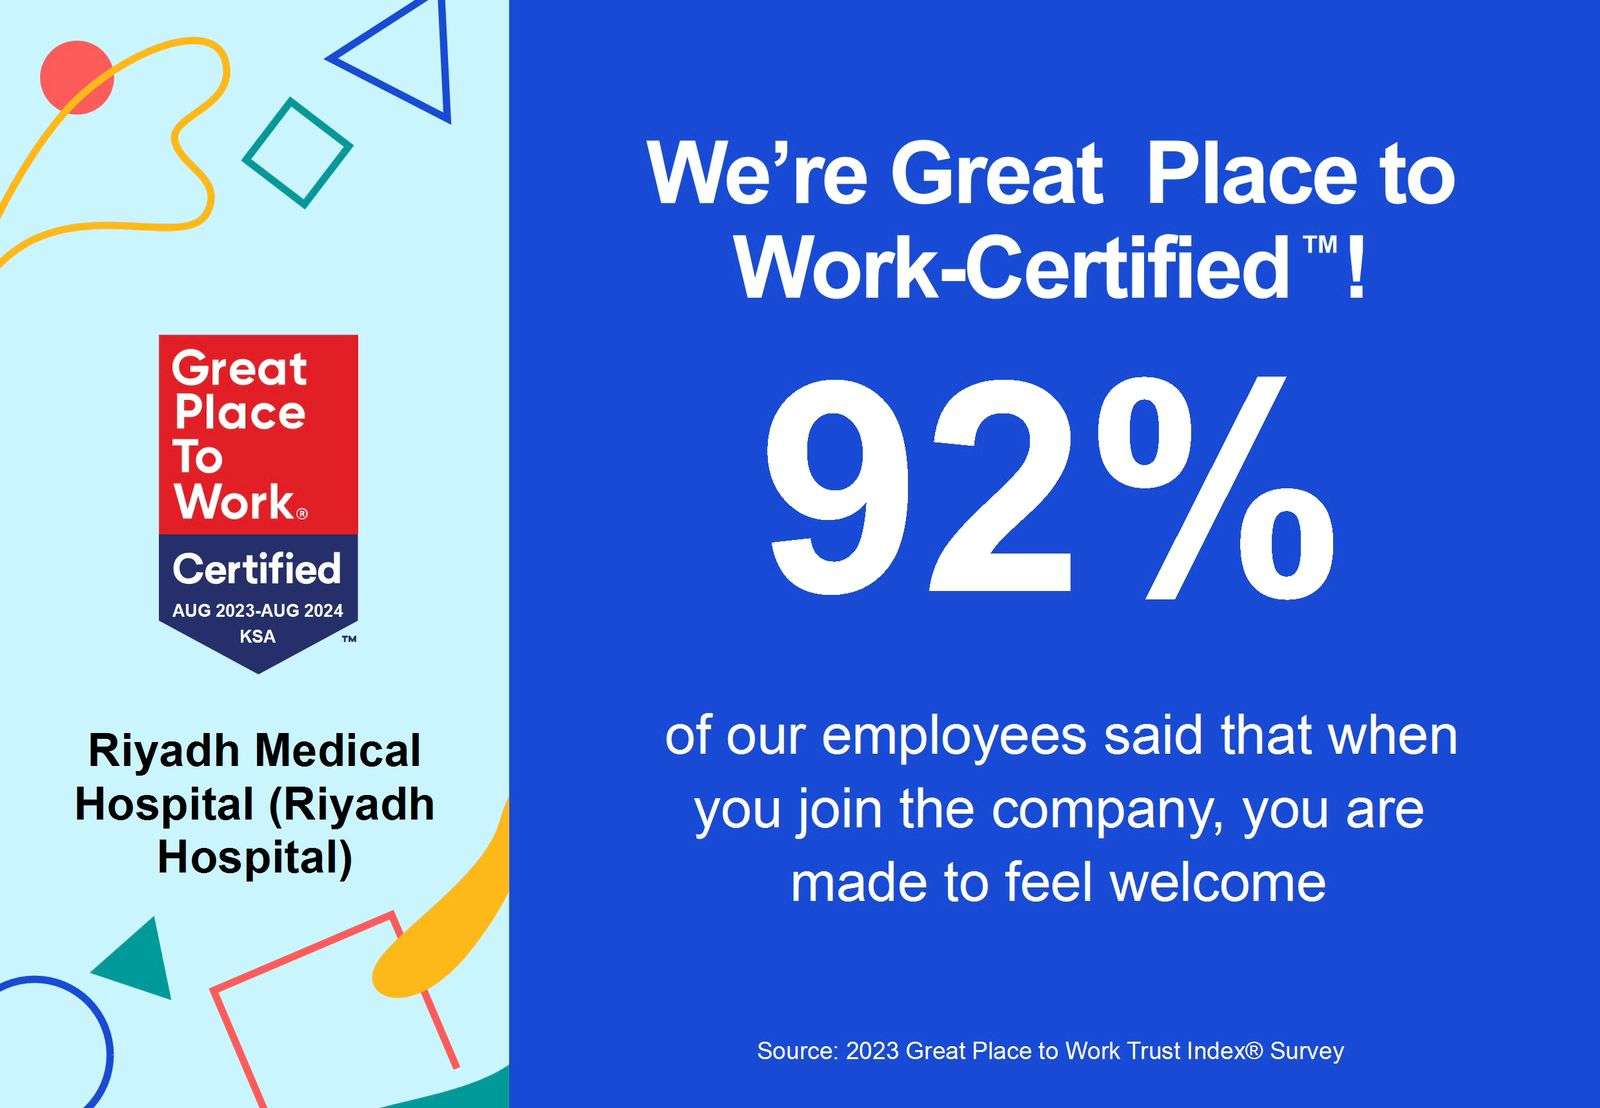 DAU’s University Hospital Certified for Best Workplace